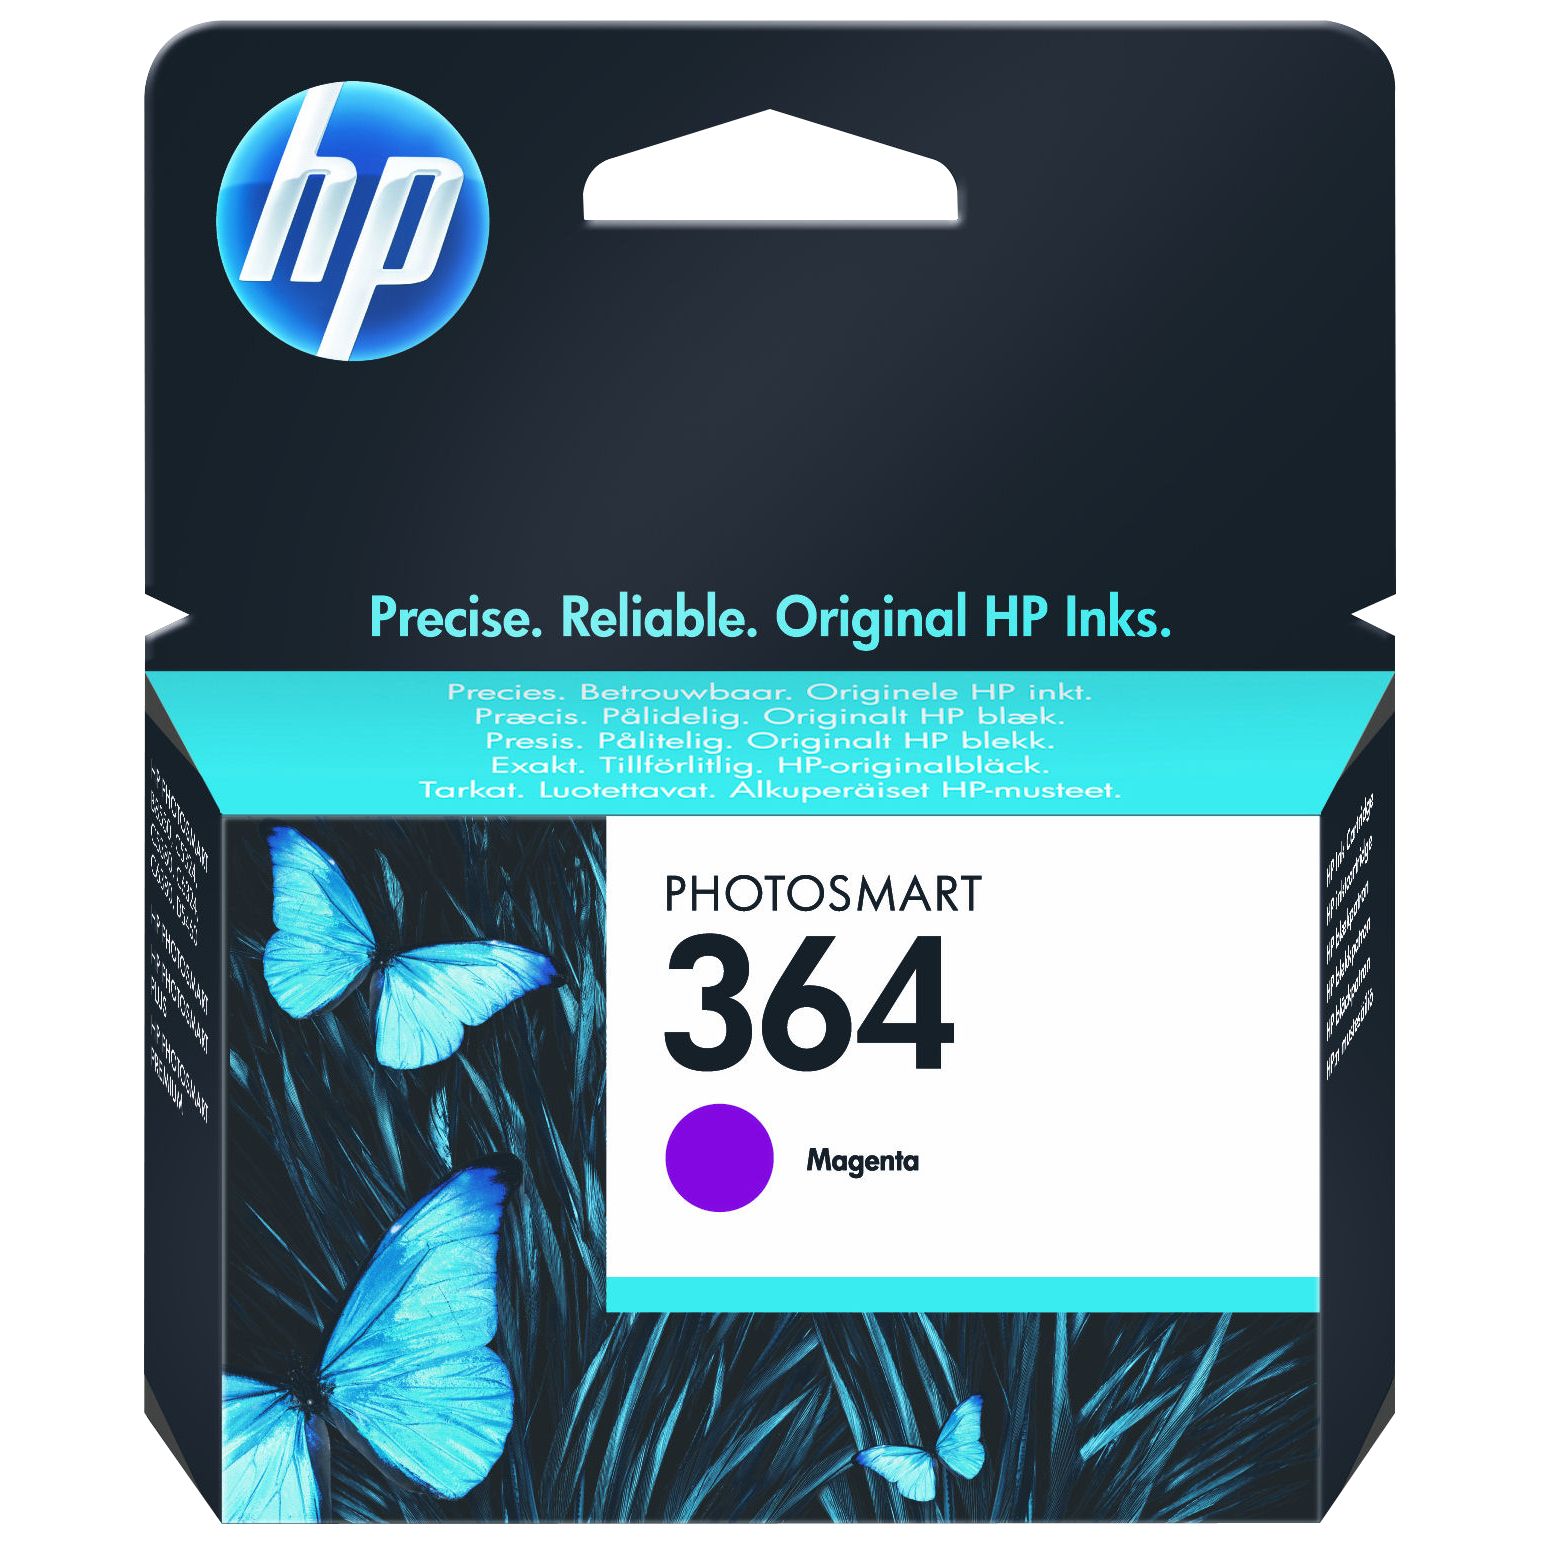 HP 364 Photosmart Ink Cartridge, Magenta,